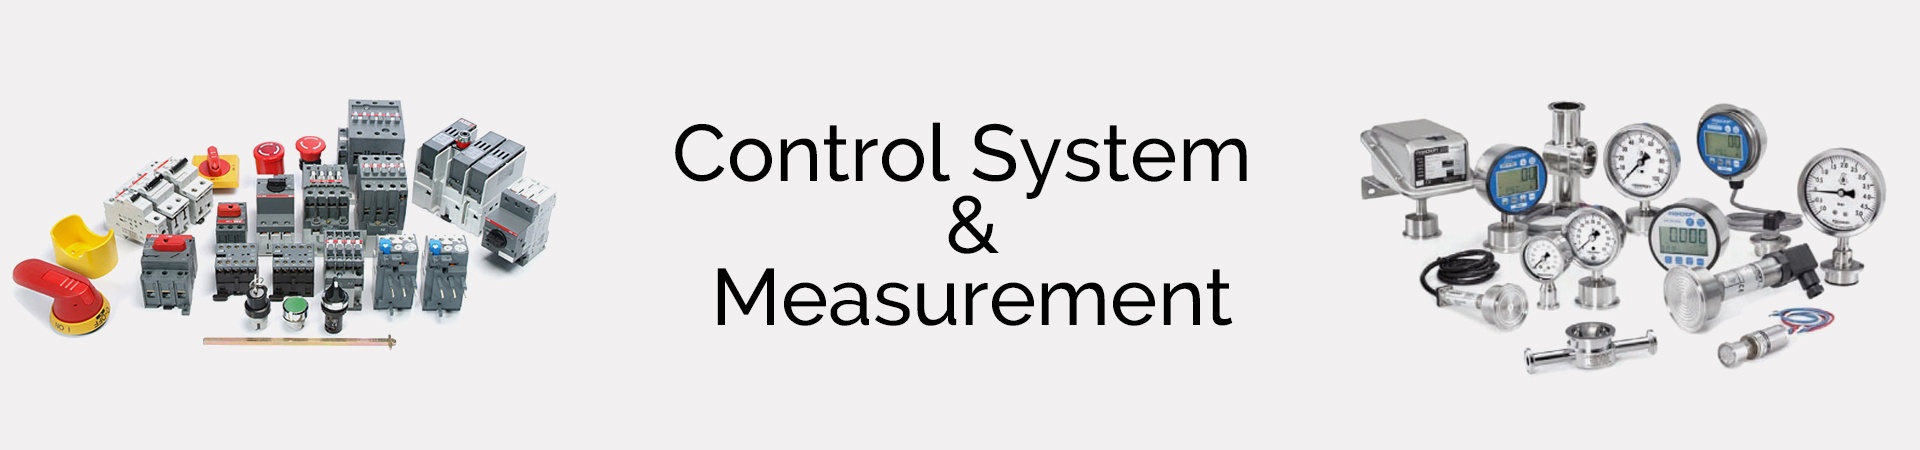 Control system & measurement